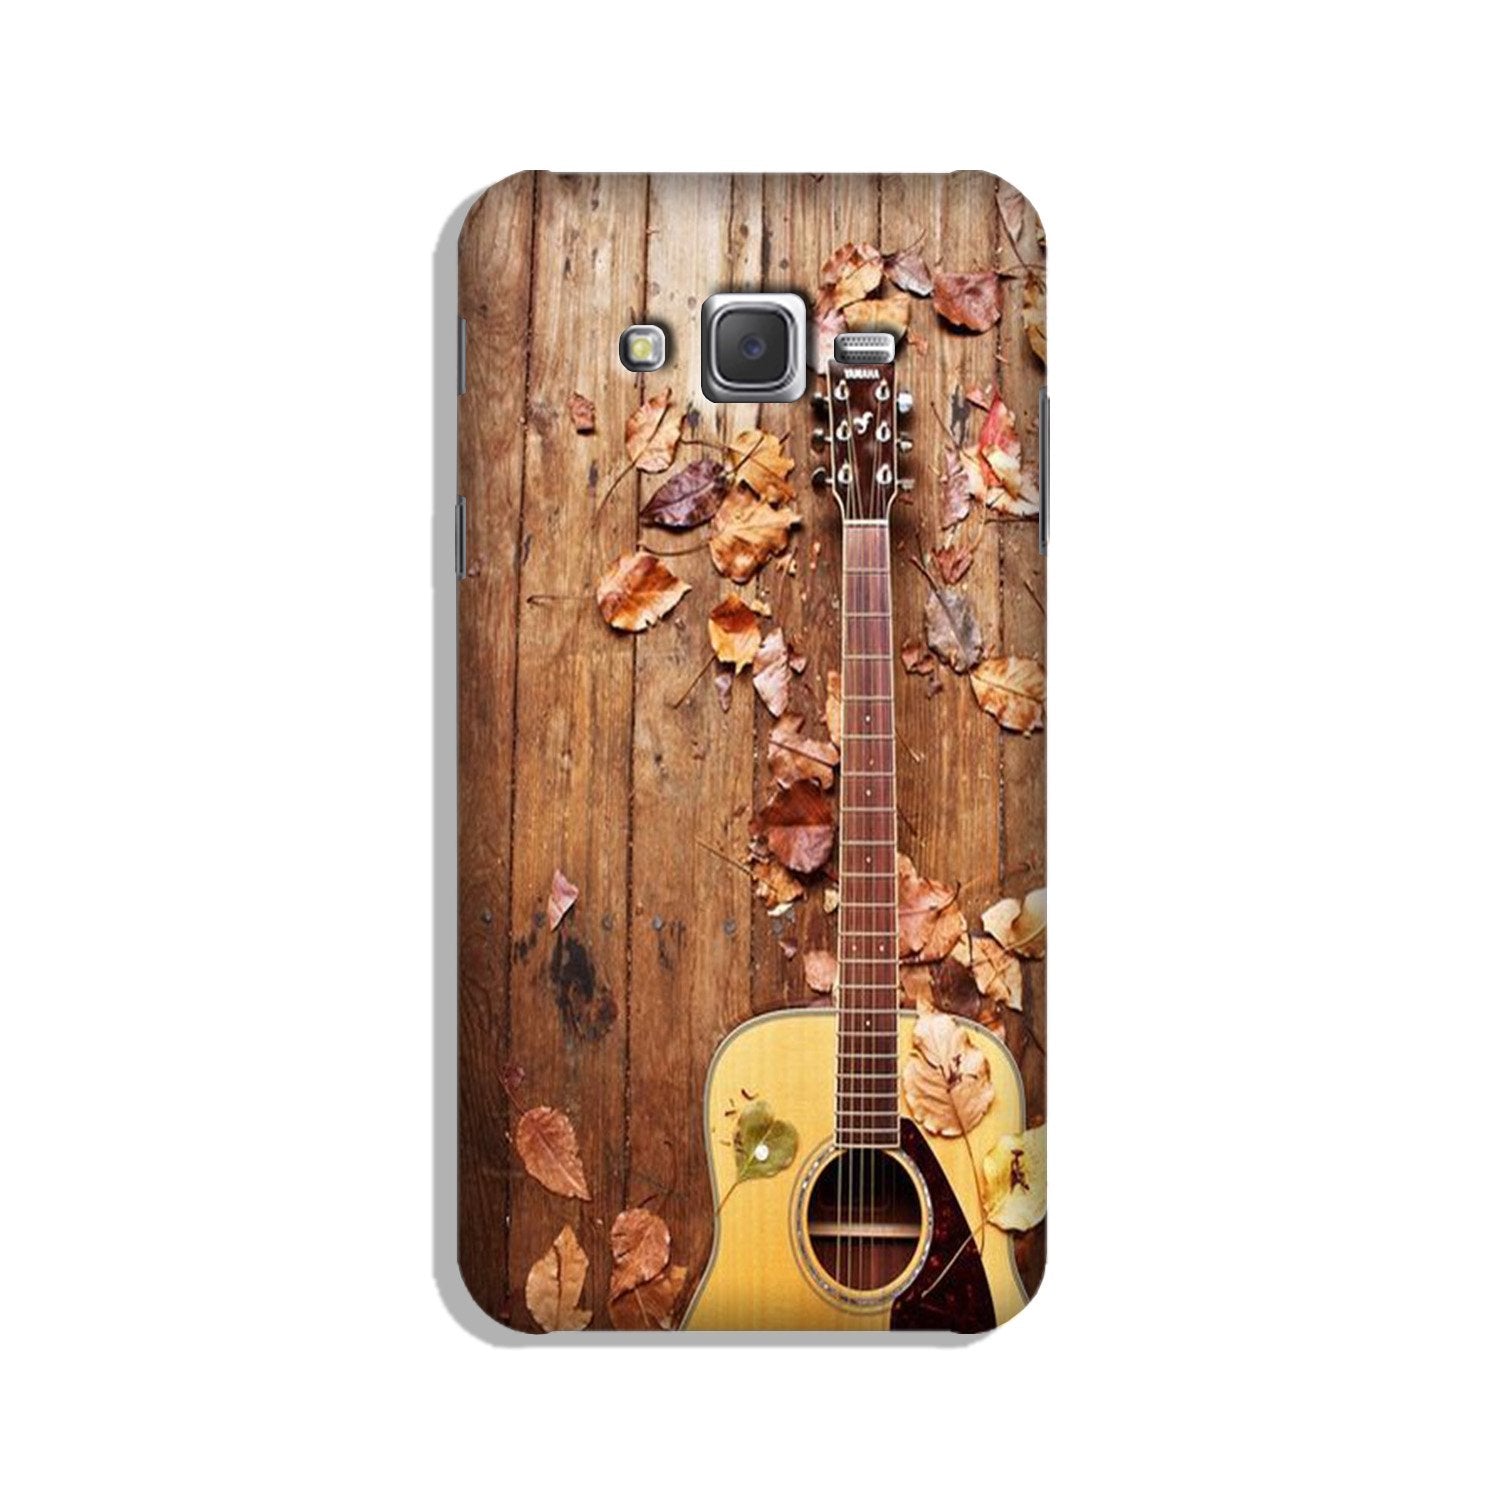 Guitar Case for Galaxy J3 (2015)